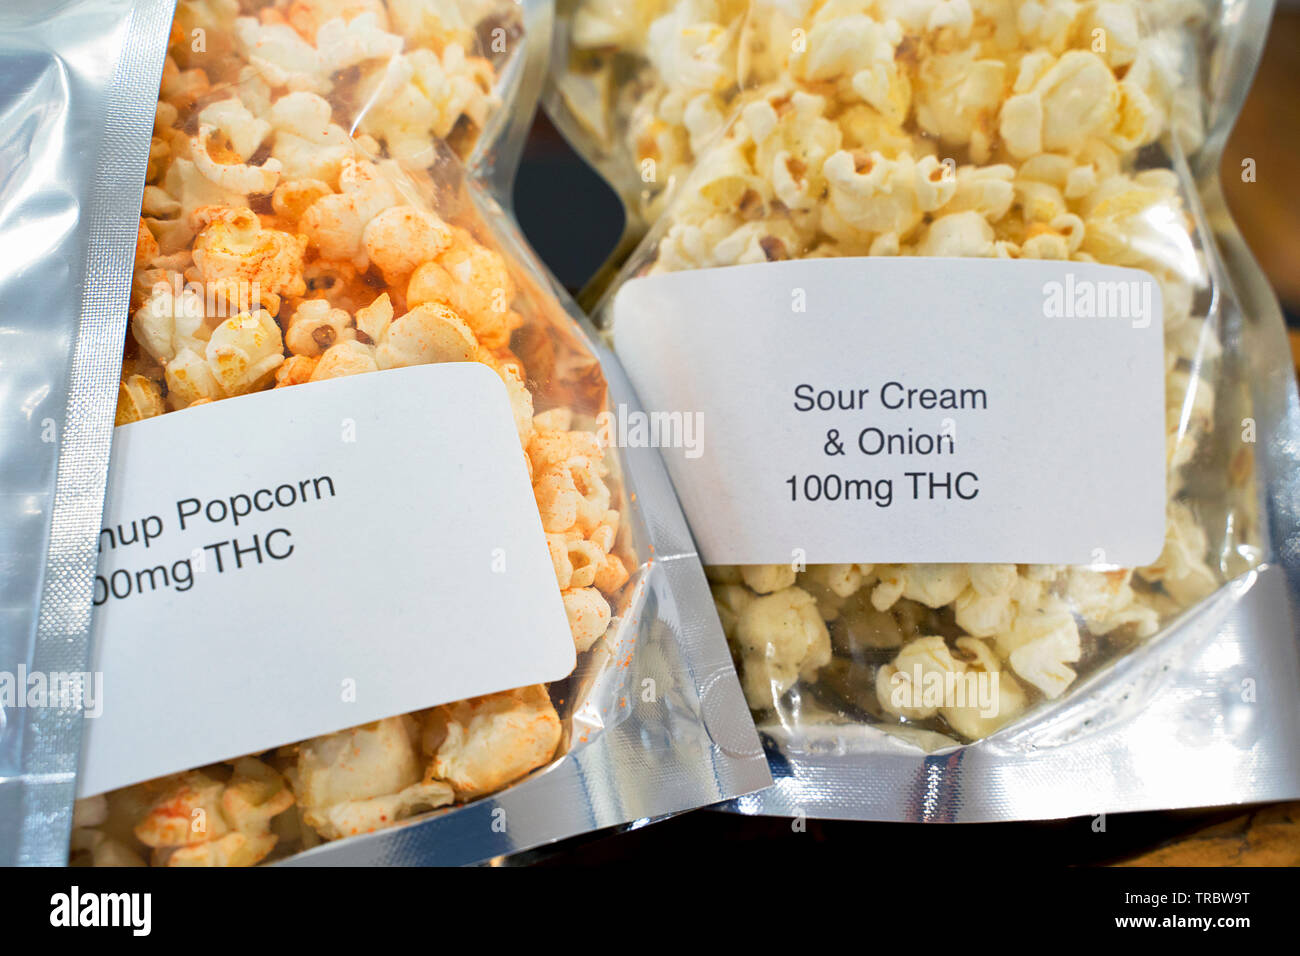 Edible Cannabis, Popcorn with 100mg THC, Tetrahydrocannabinol, Marijuana, Cannabis in Food Stock Photo